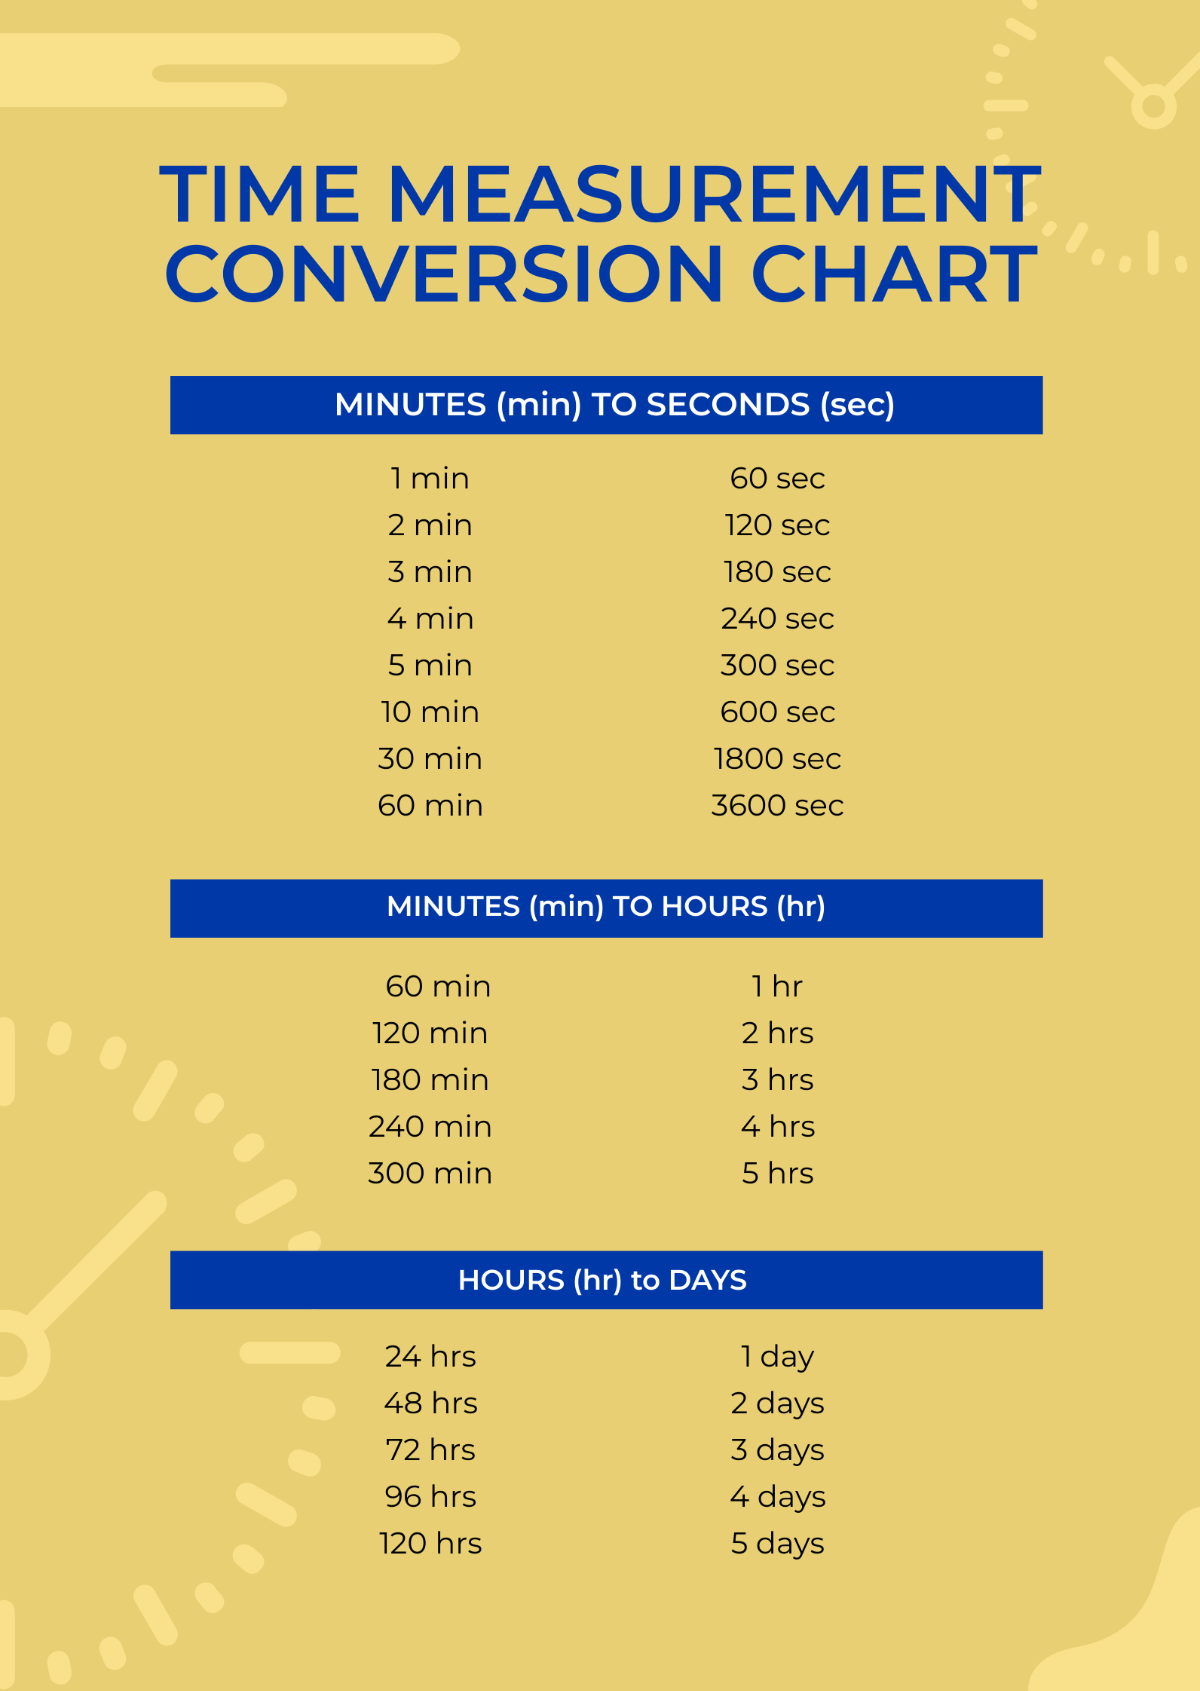 Time Measurement Conversion Chart Template